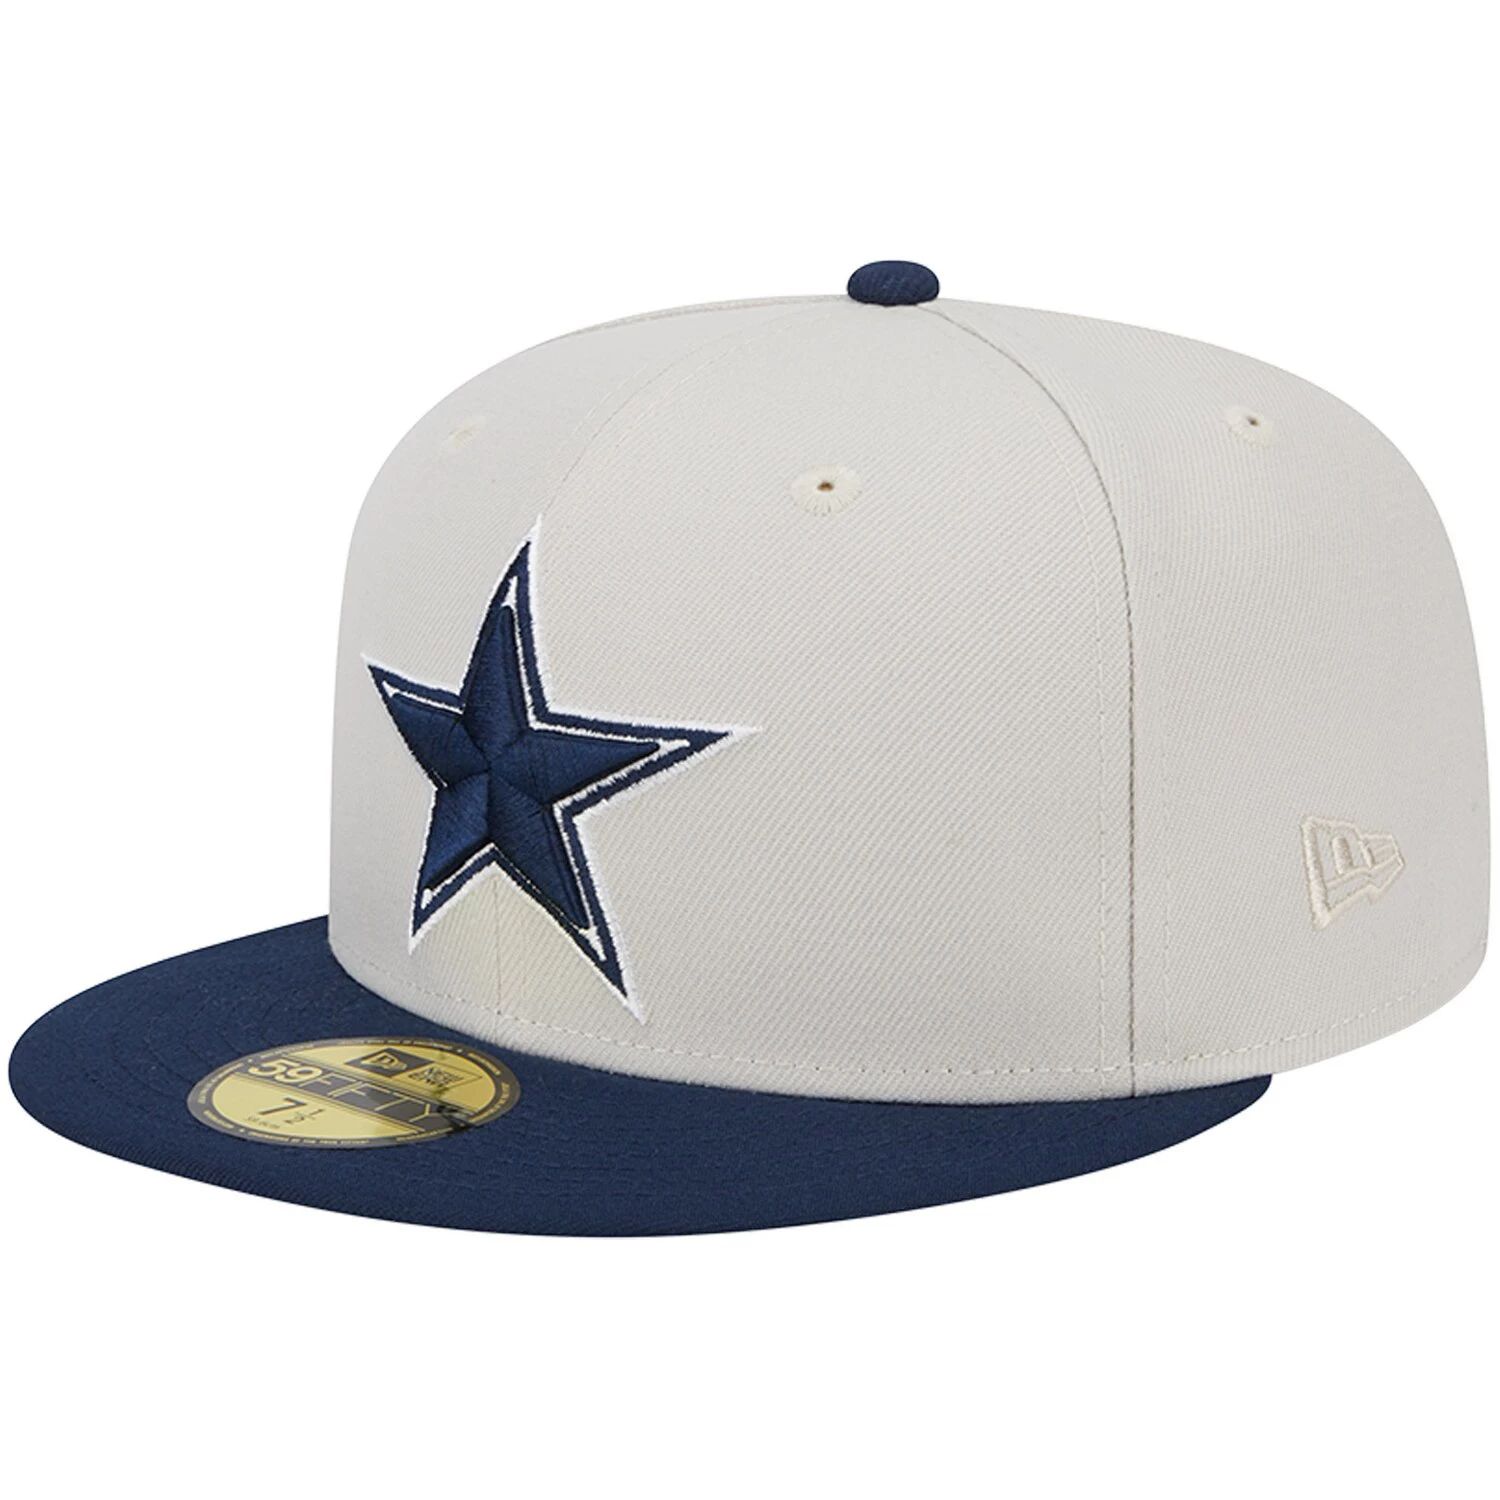 Мужская шляпа New Era цвета хаки/темно-синего цвета Dallas Cowboys Super Bowl Champions 59FIFTY.